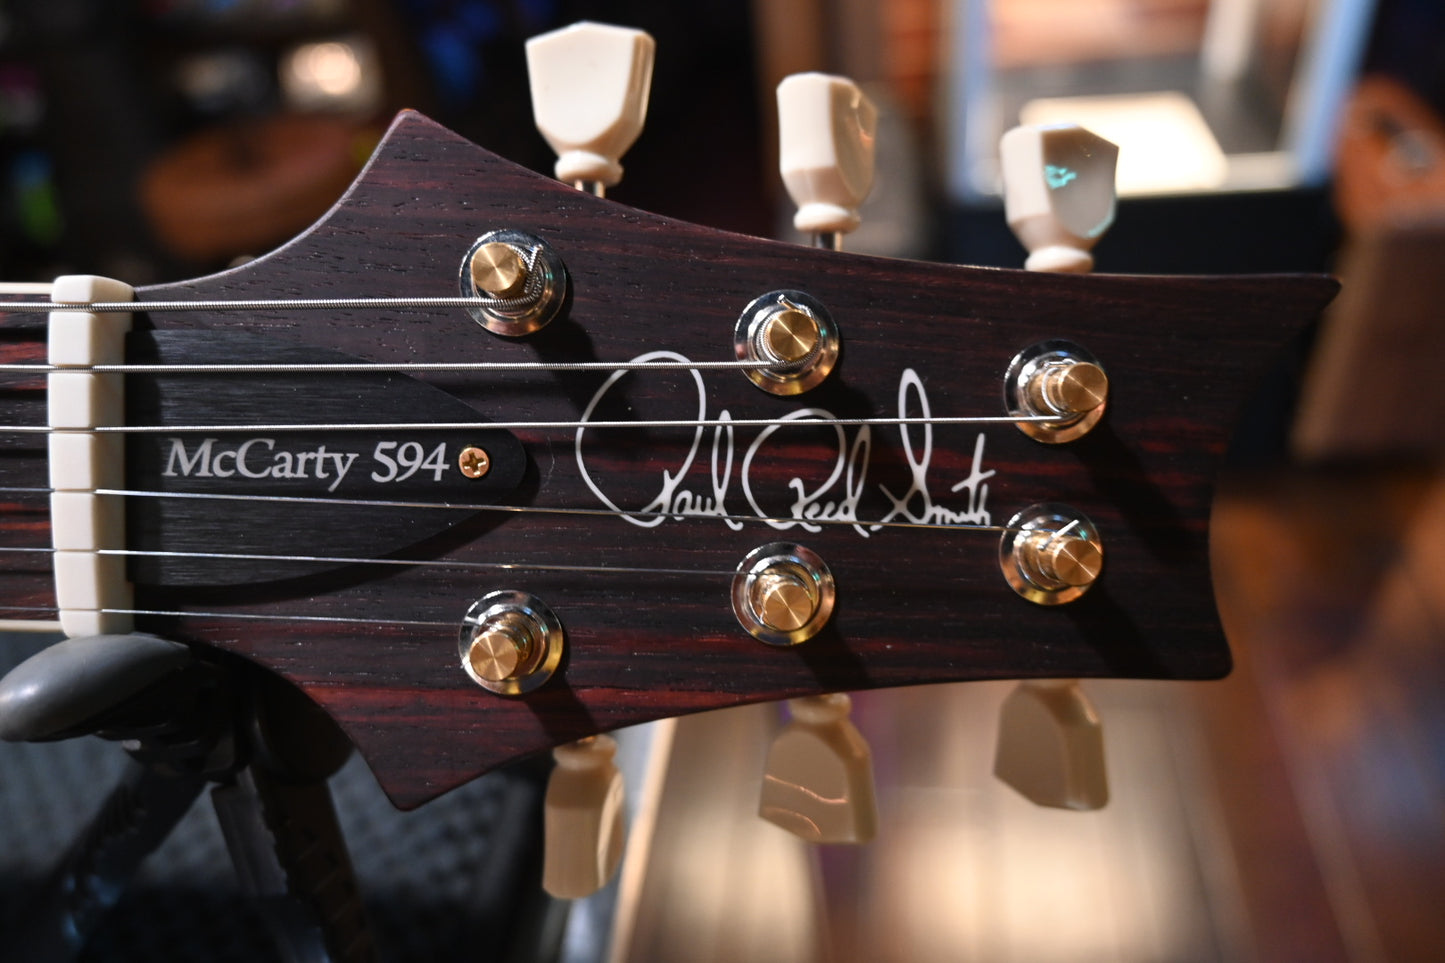 PRS McCarty 594 Hollowbody II 10-Top - Charcoal Guitar #0965 - Danville Music